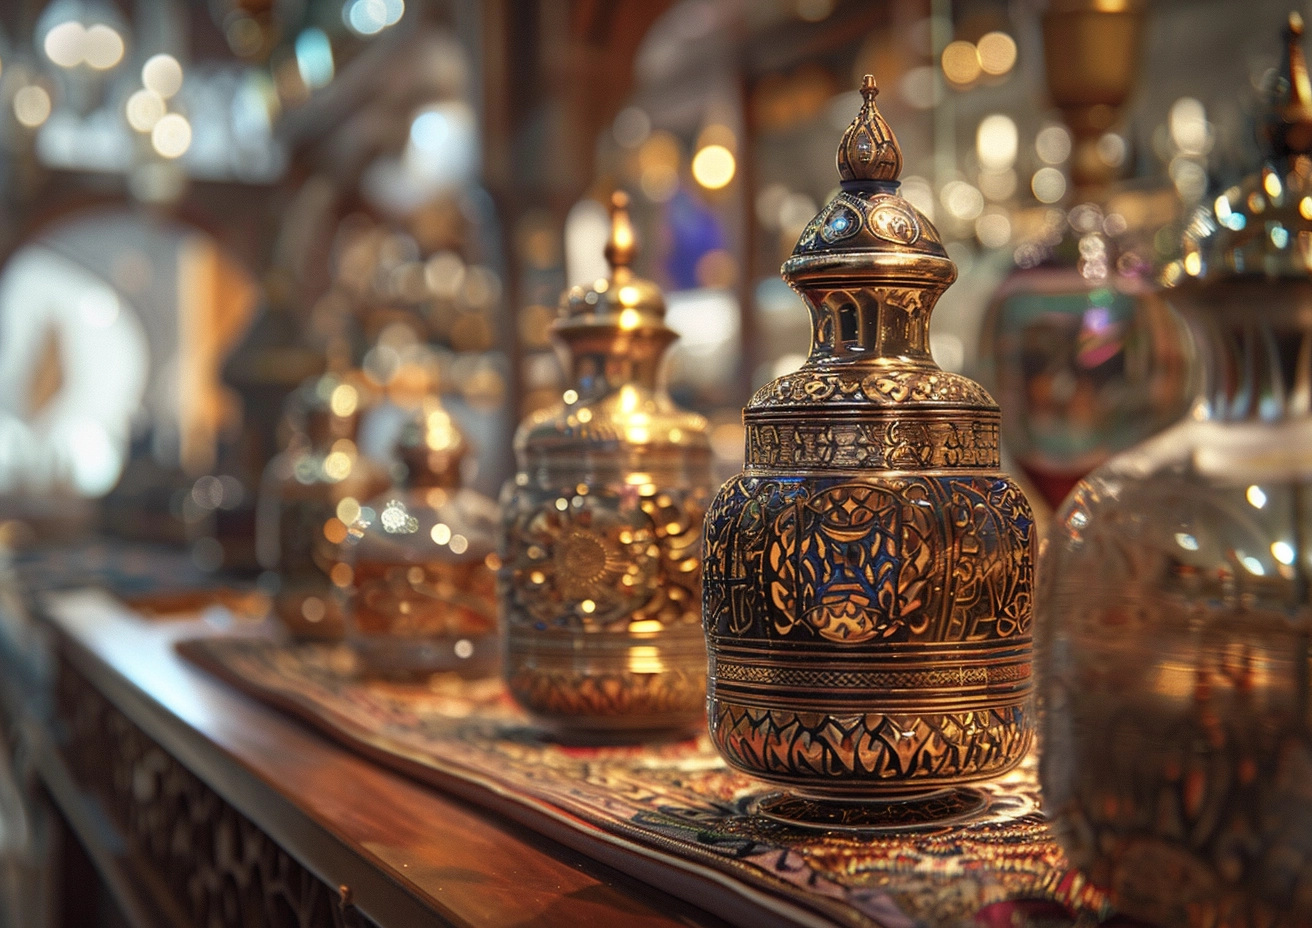 Alluring image of Arabian oud perfume in an Arabian interior